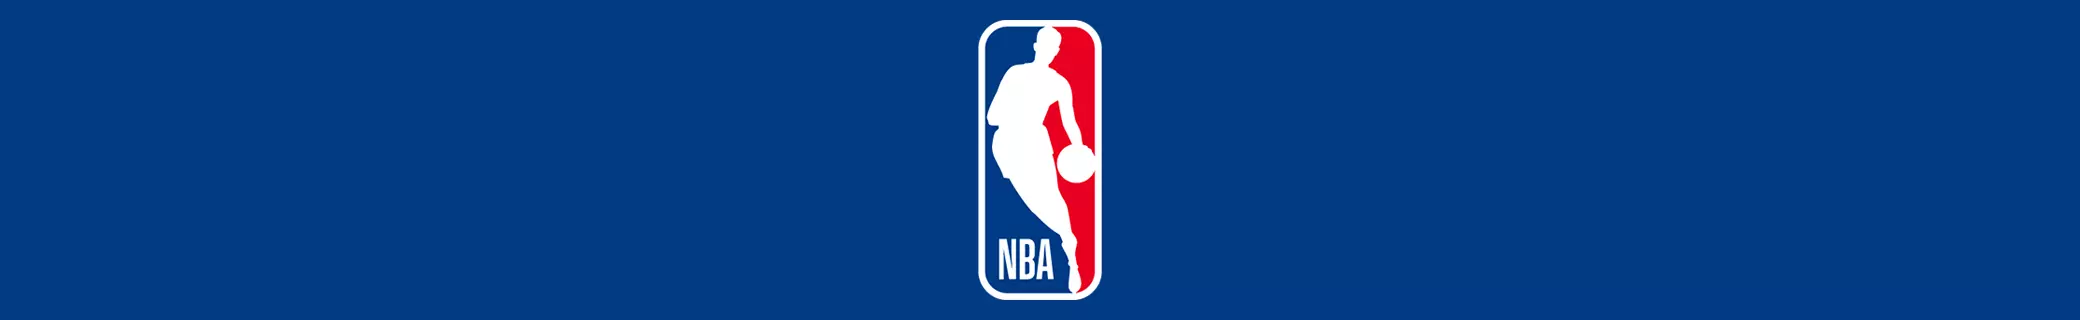 NBA banner